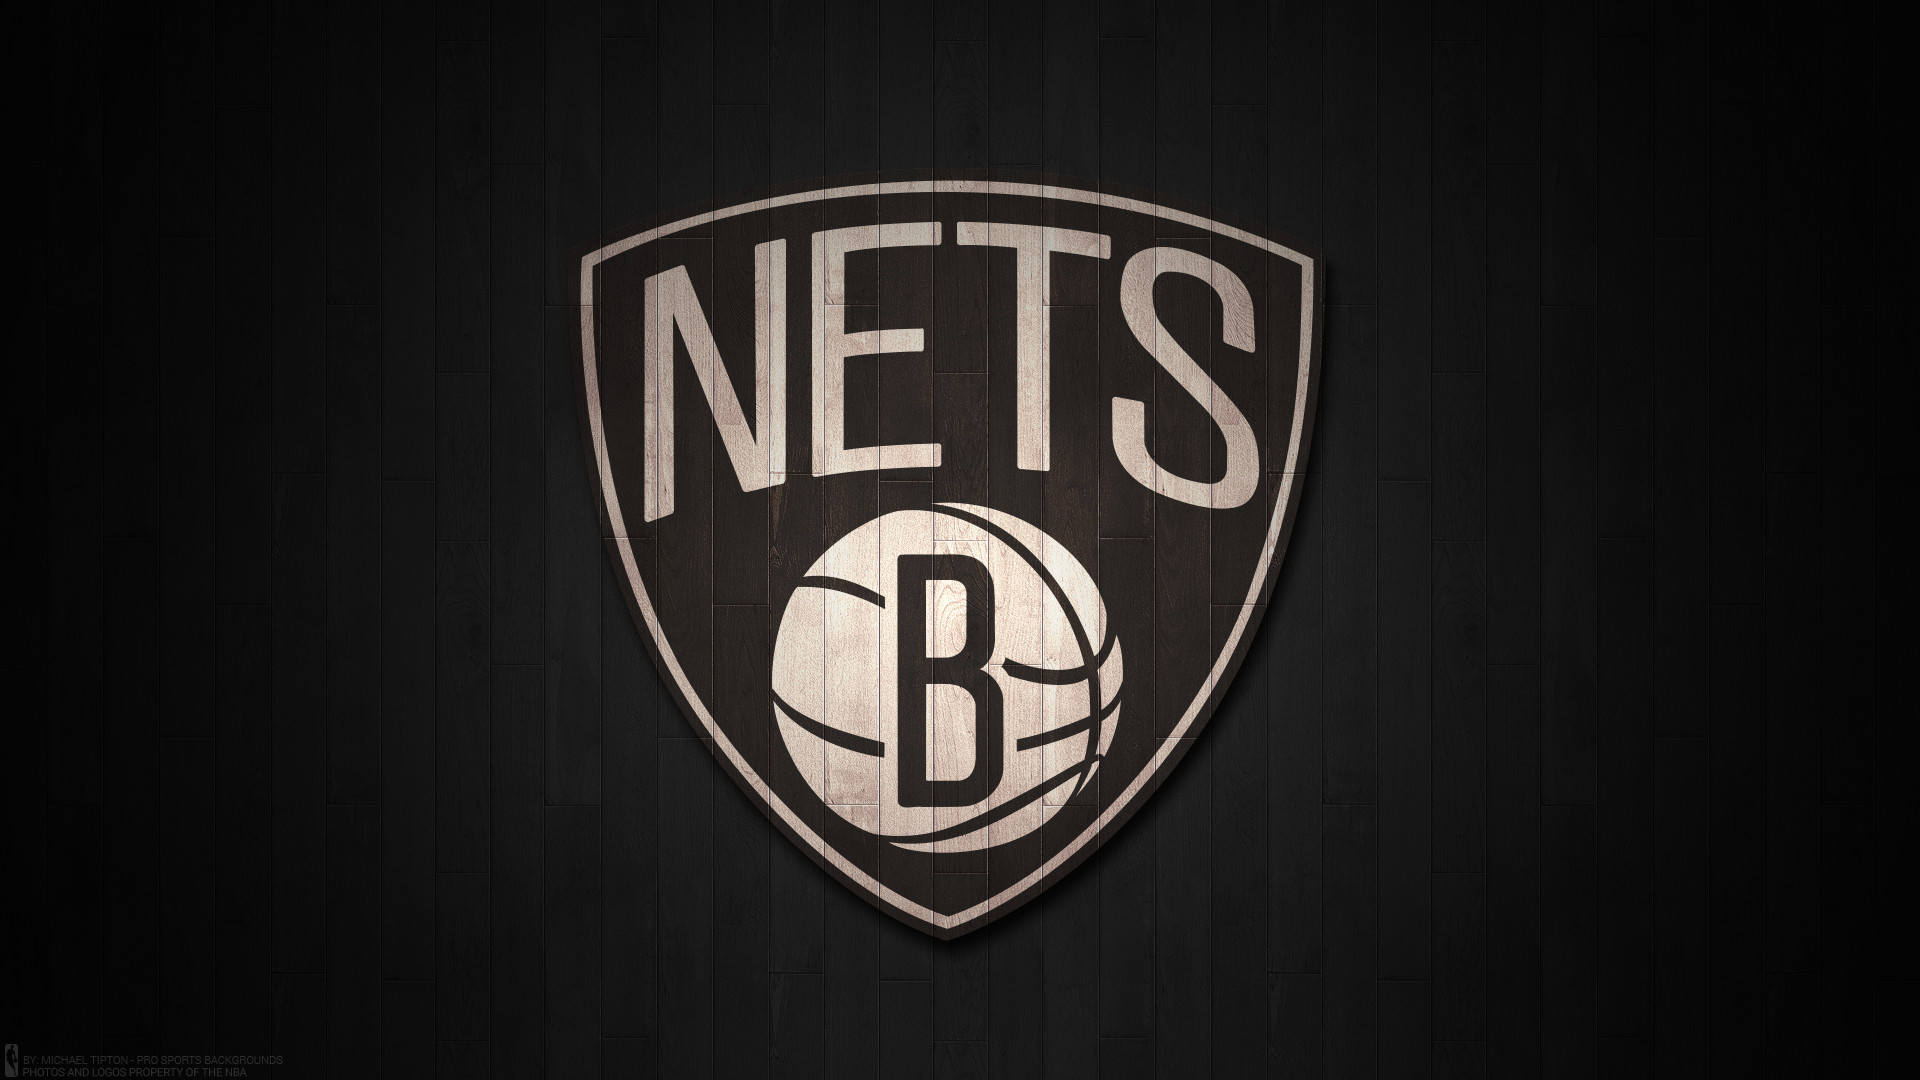 1920x1080 ... Brooklyn Nets 2017 nba basketball team logo hardwood wallpaper free for  mac and desktop pc computer